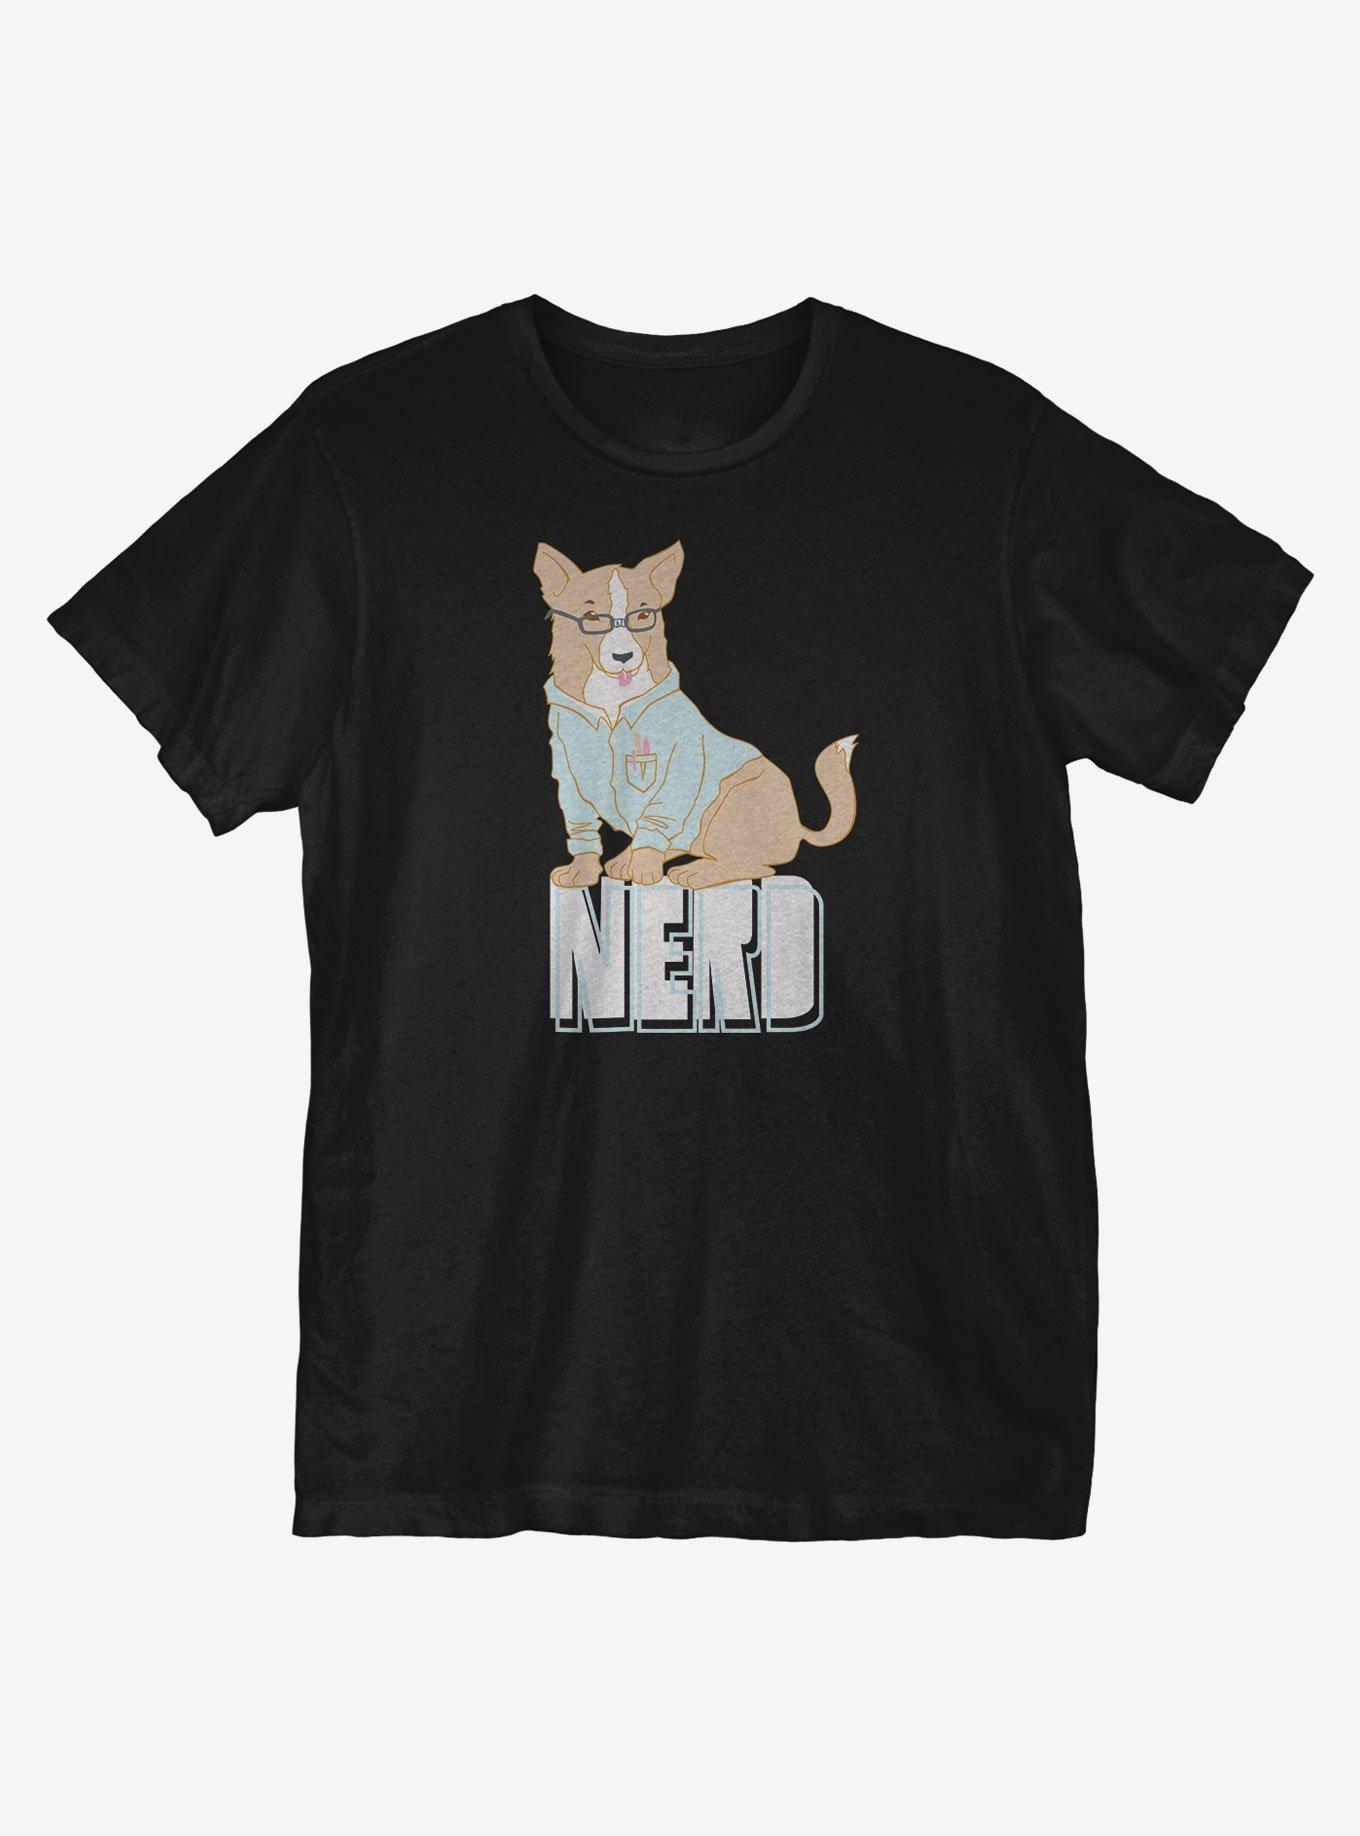 Nerd Corgi T-Shirt